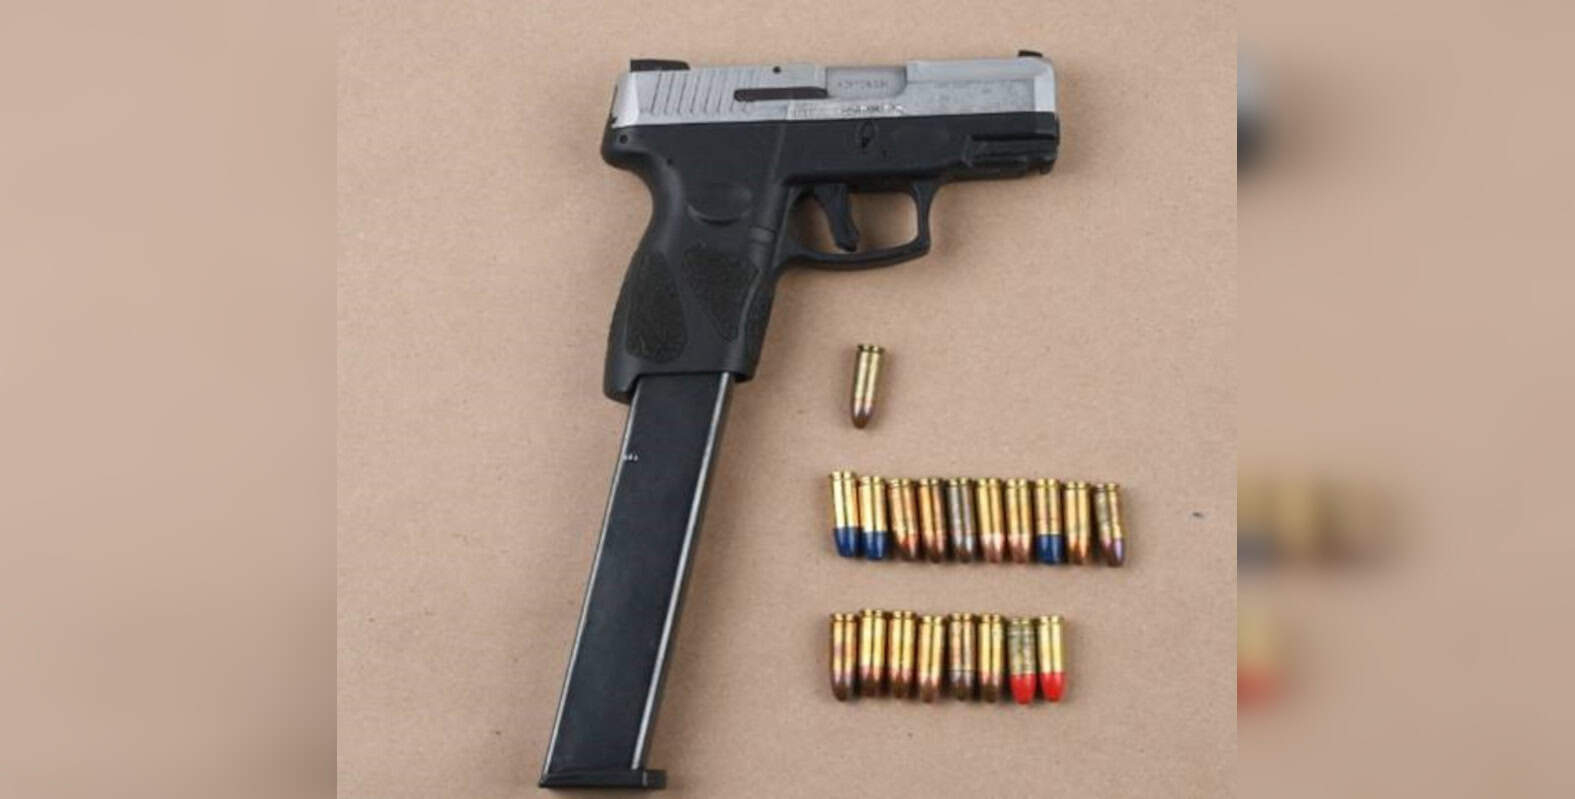 Illegal handgun and drugs seized in Brampton traffic stop